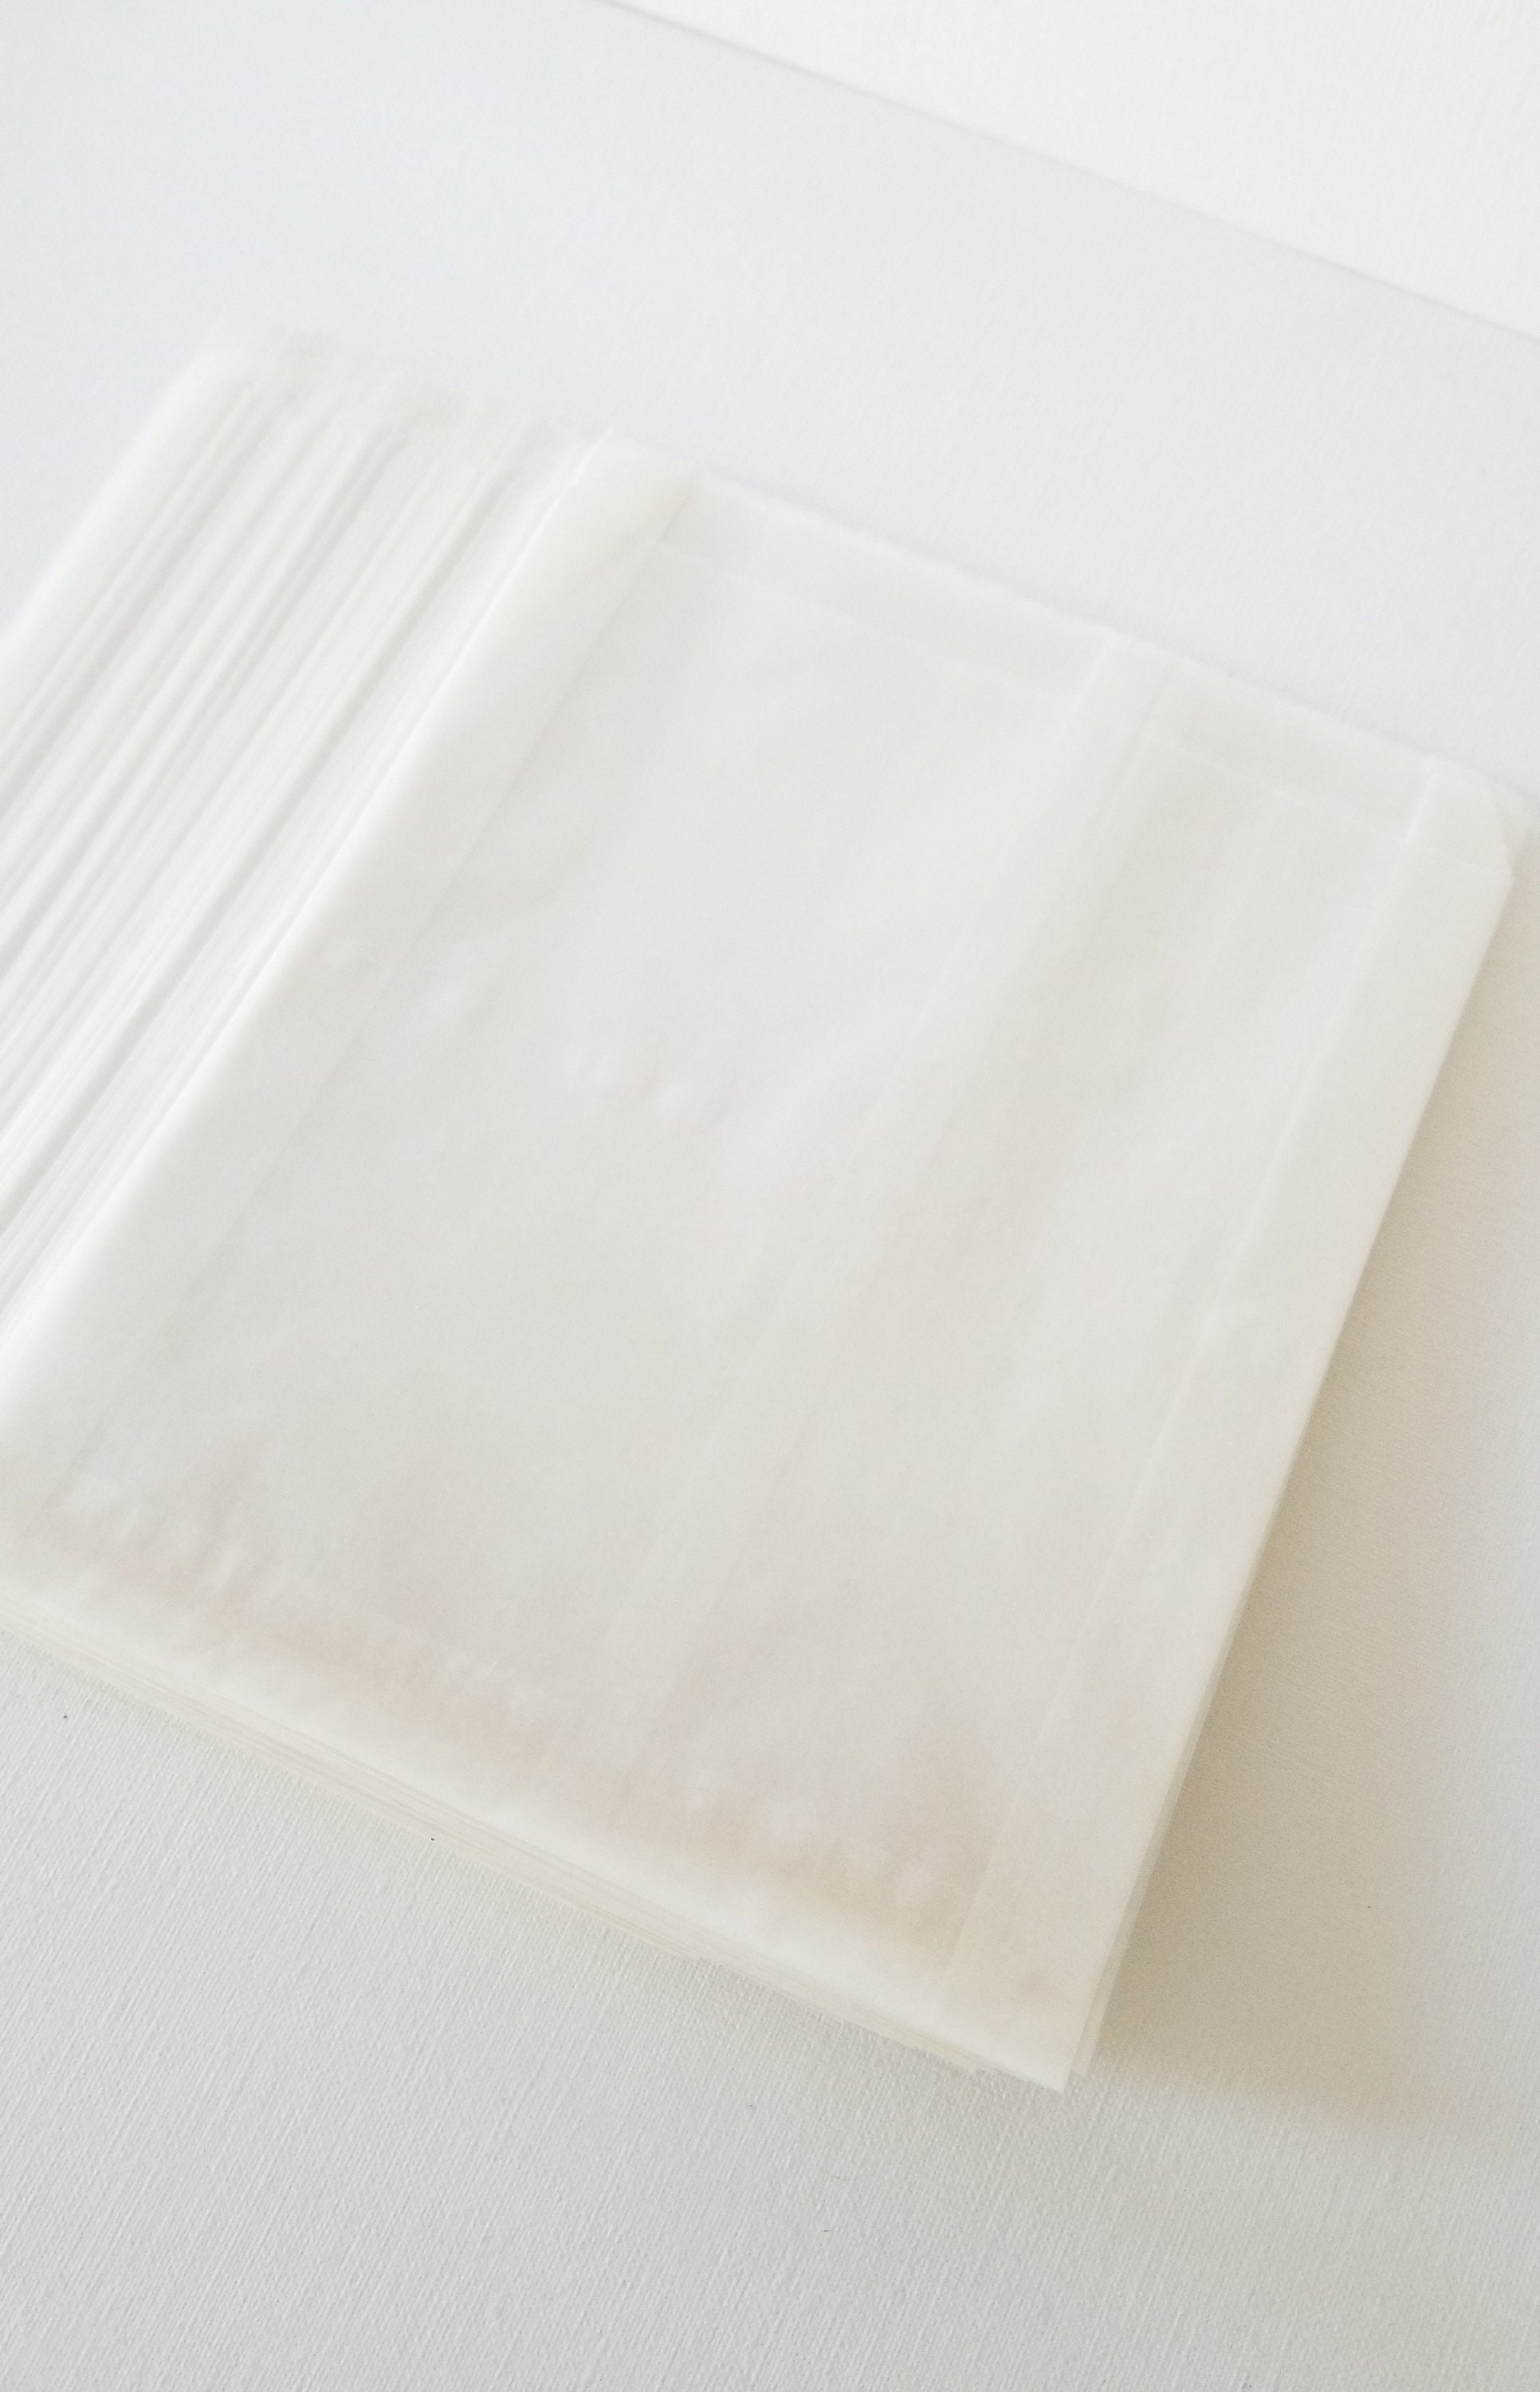 60g 70g White Glassine Paper Waterproof / Greaseproof For Food